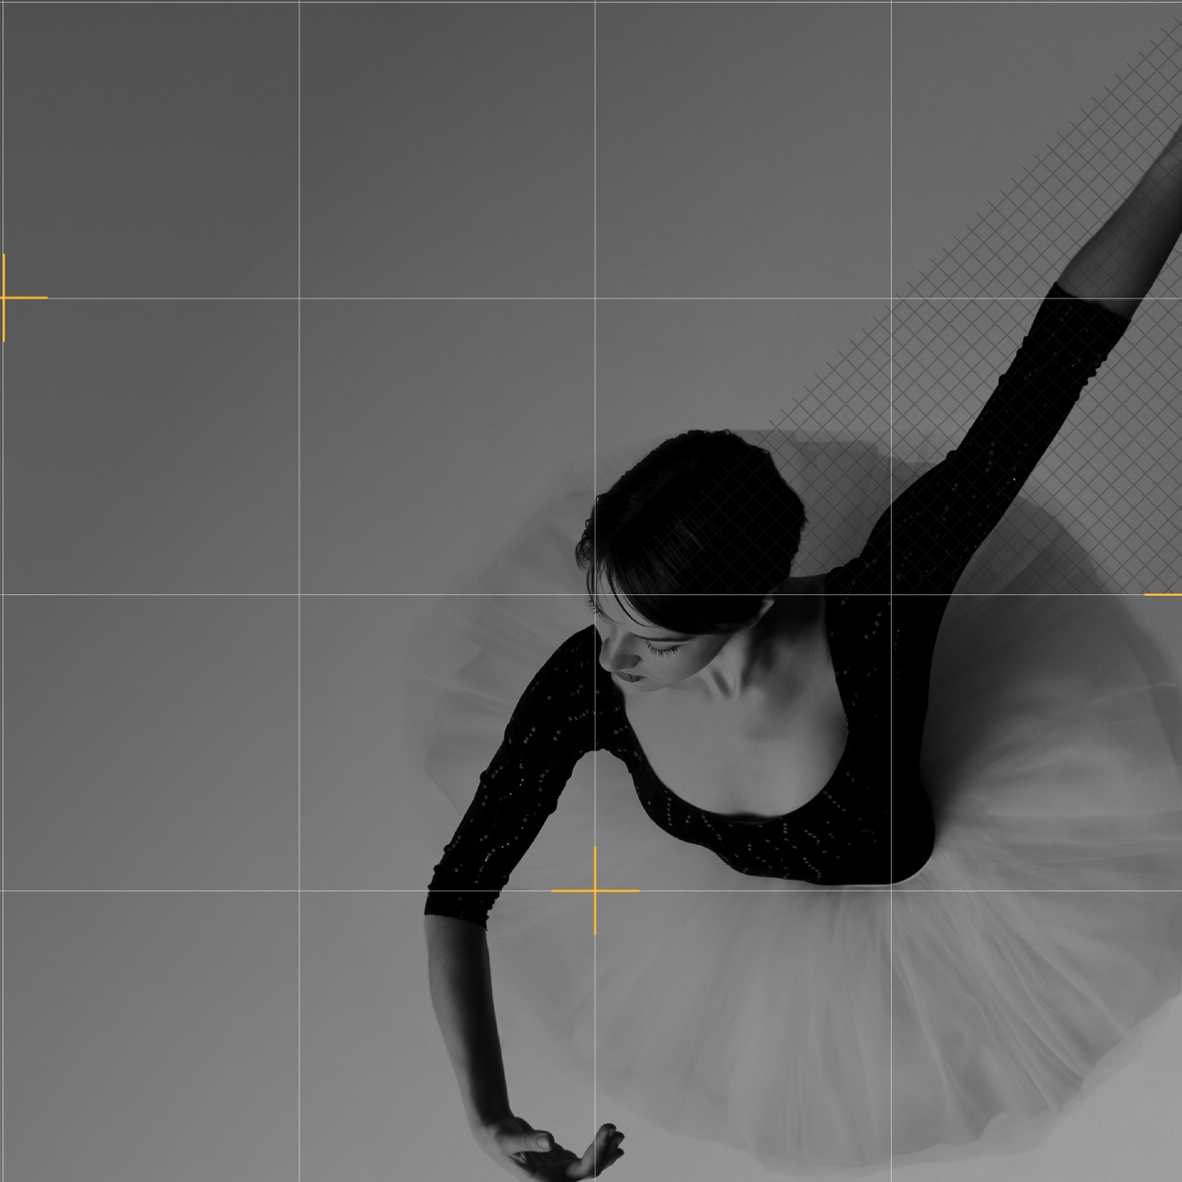 Ballerina dancing amongst a grid